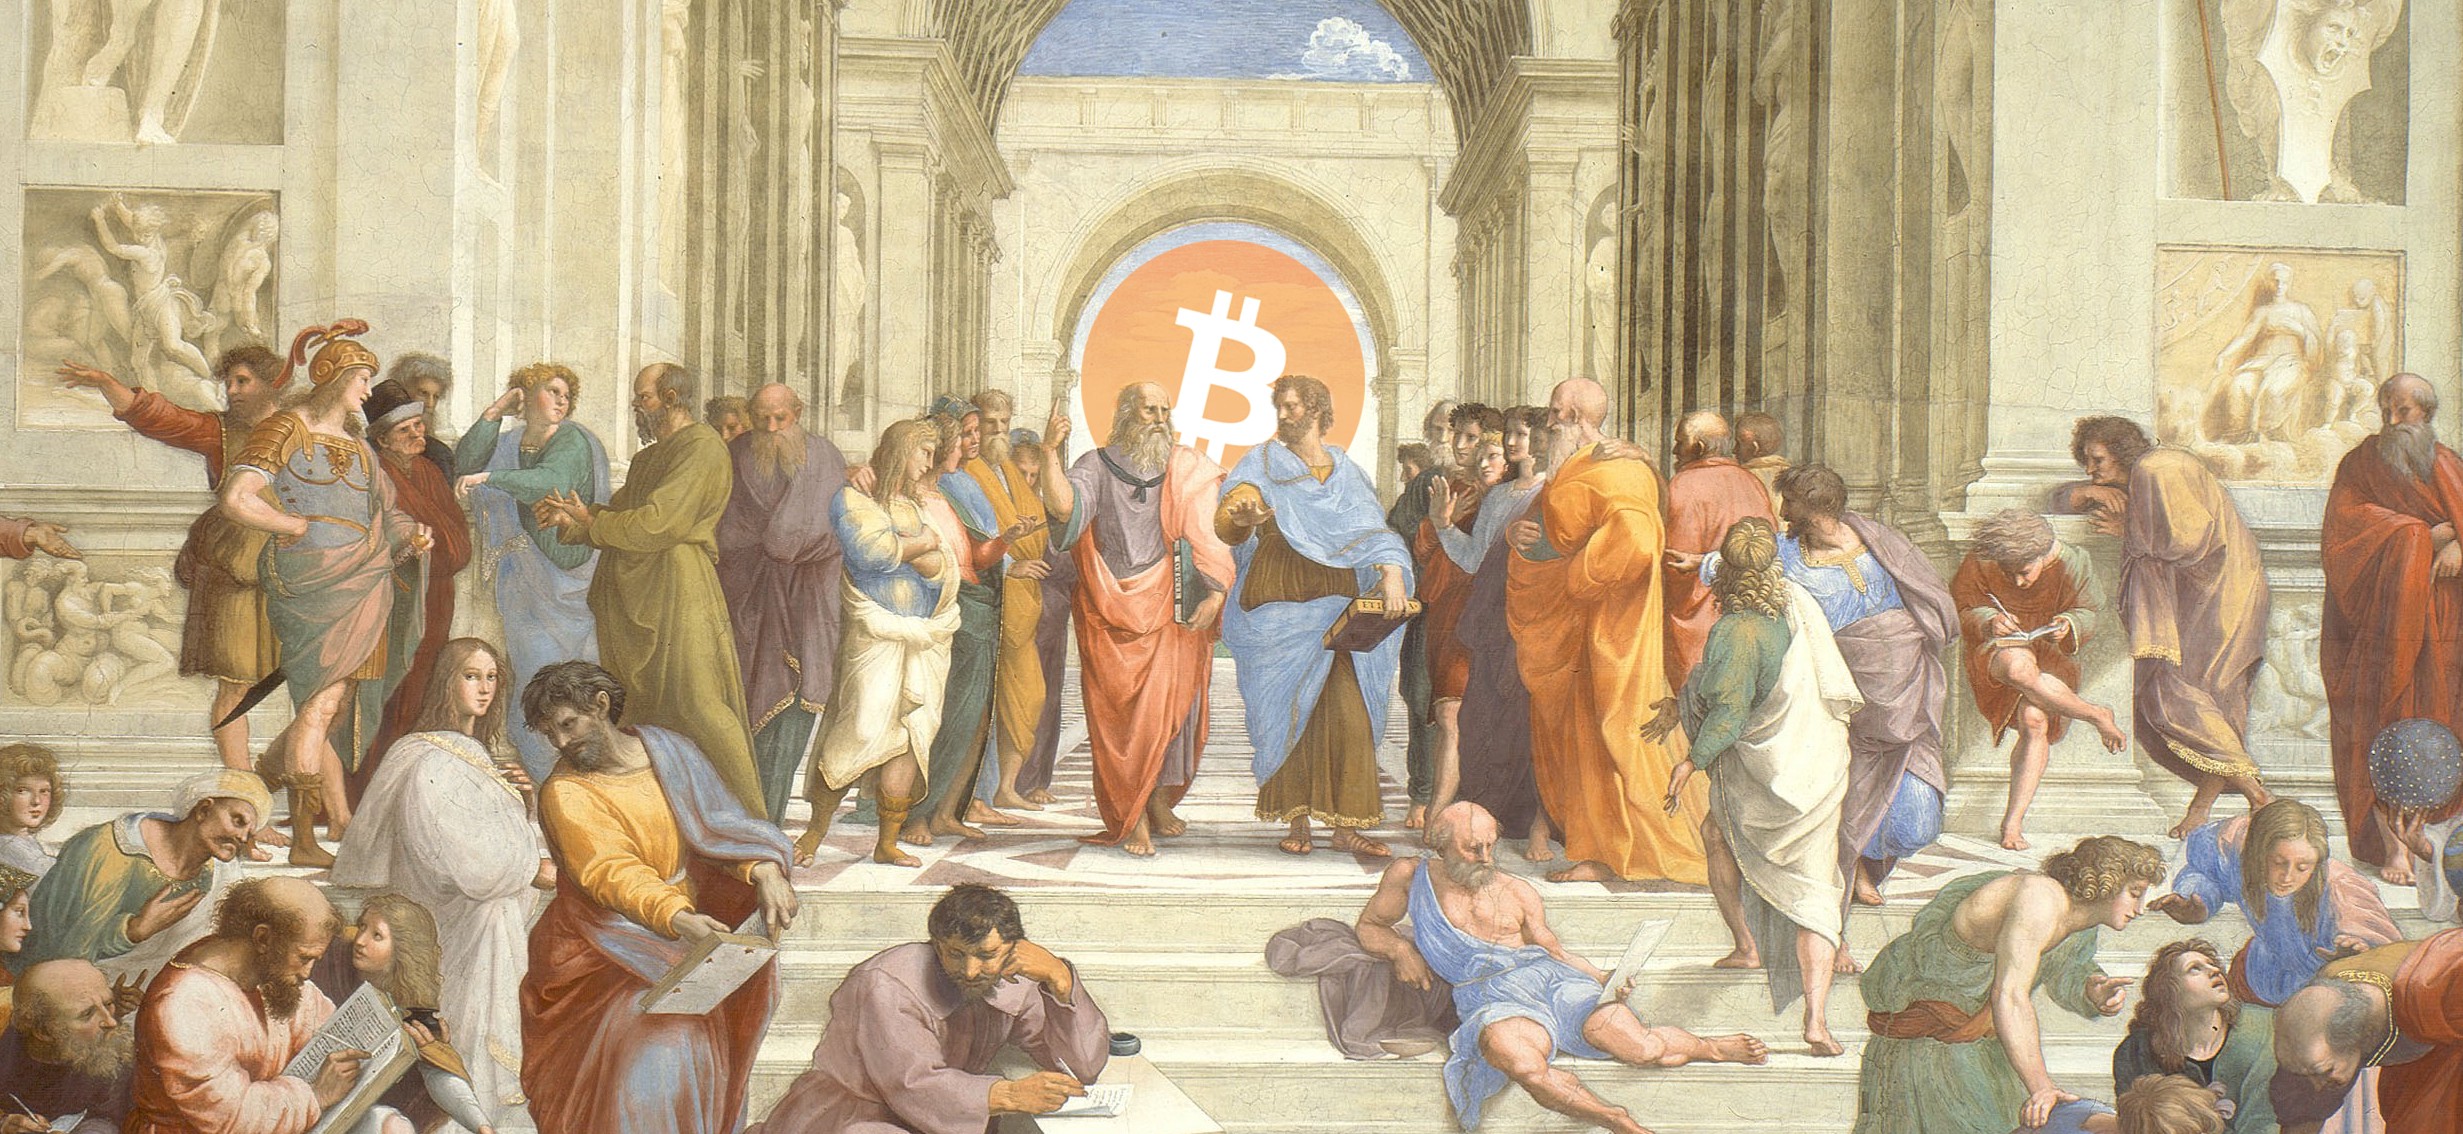 header romans with bitcoin